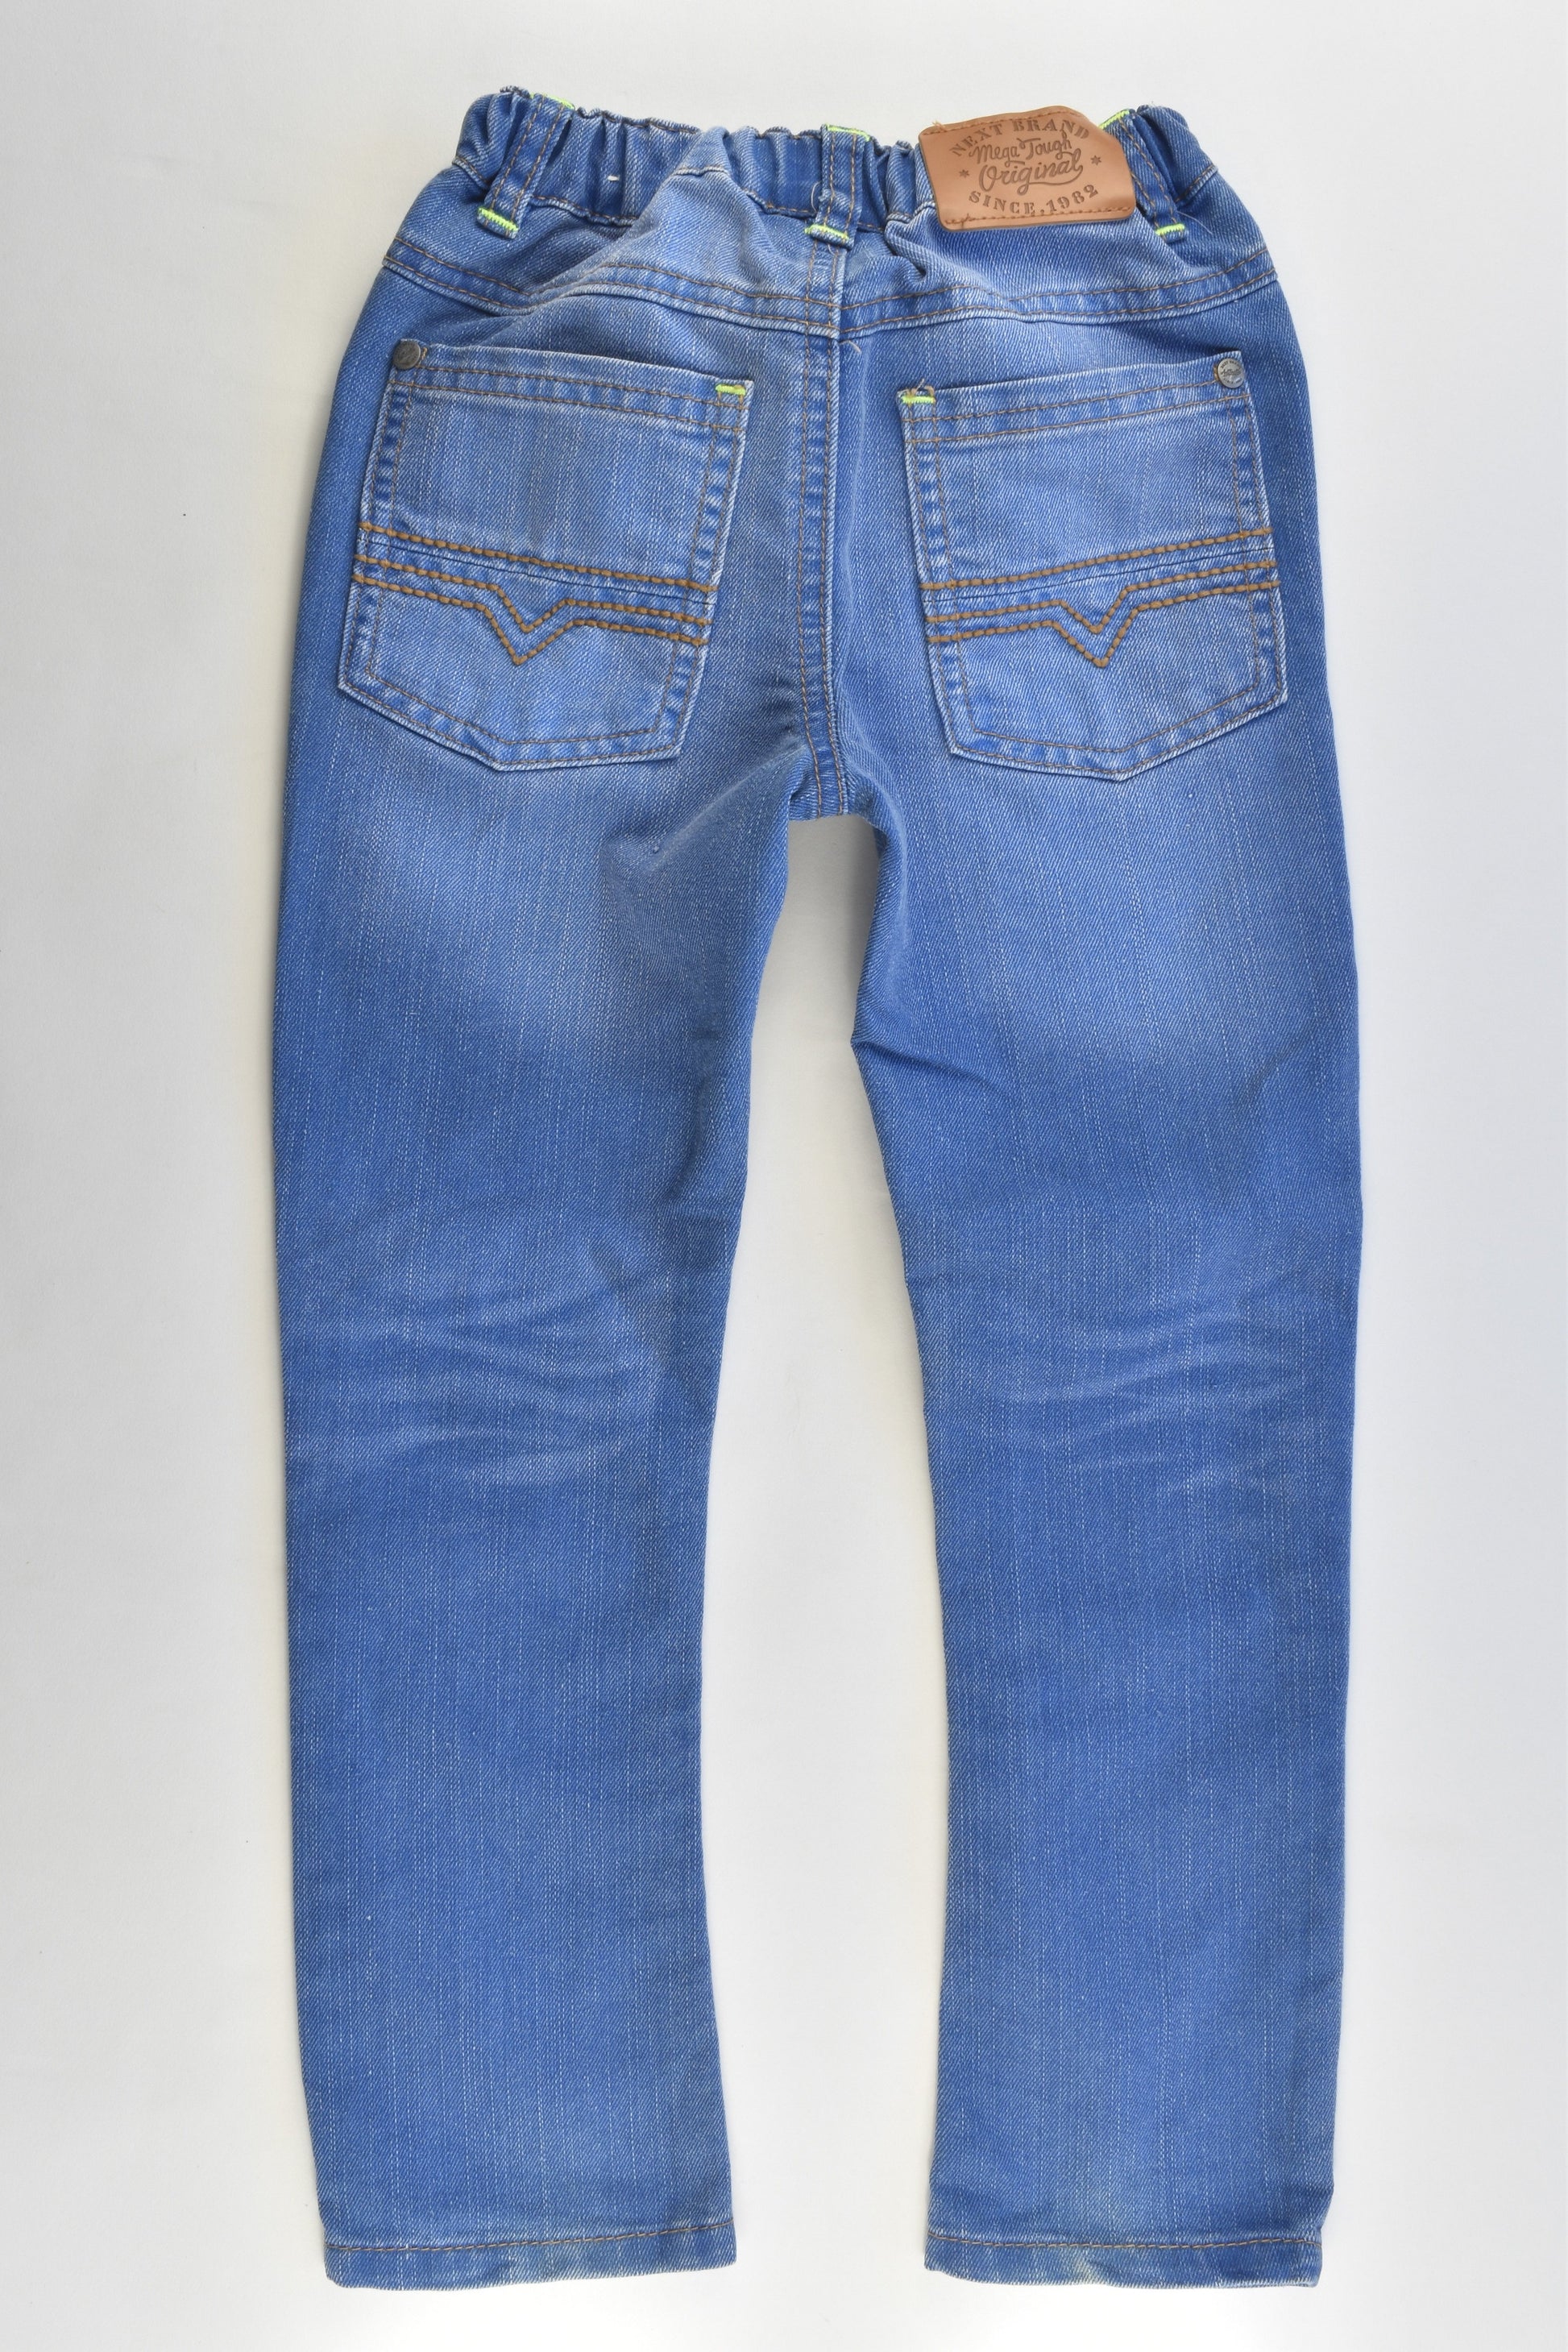 Next (UK) Size 4-5 (110 cm) Denim Pants